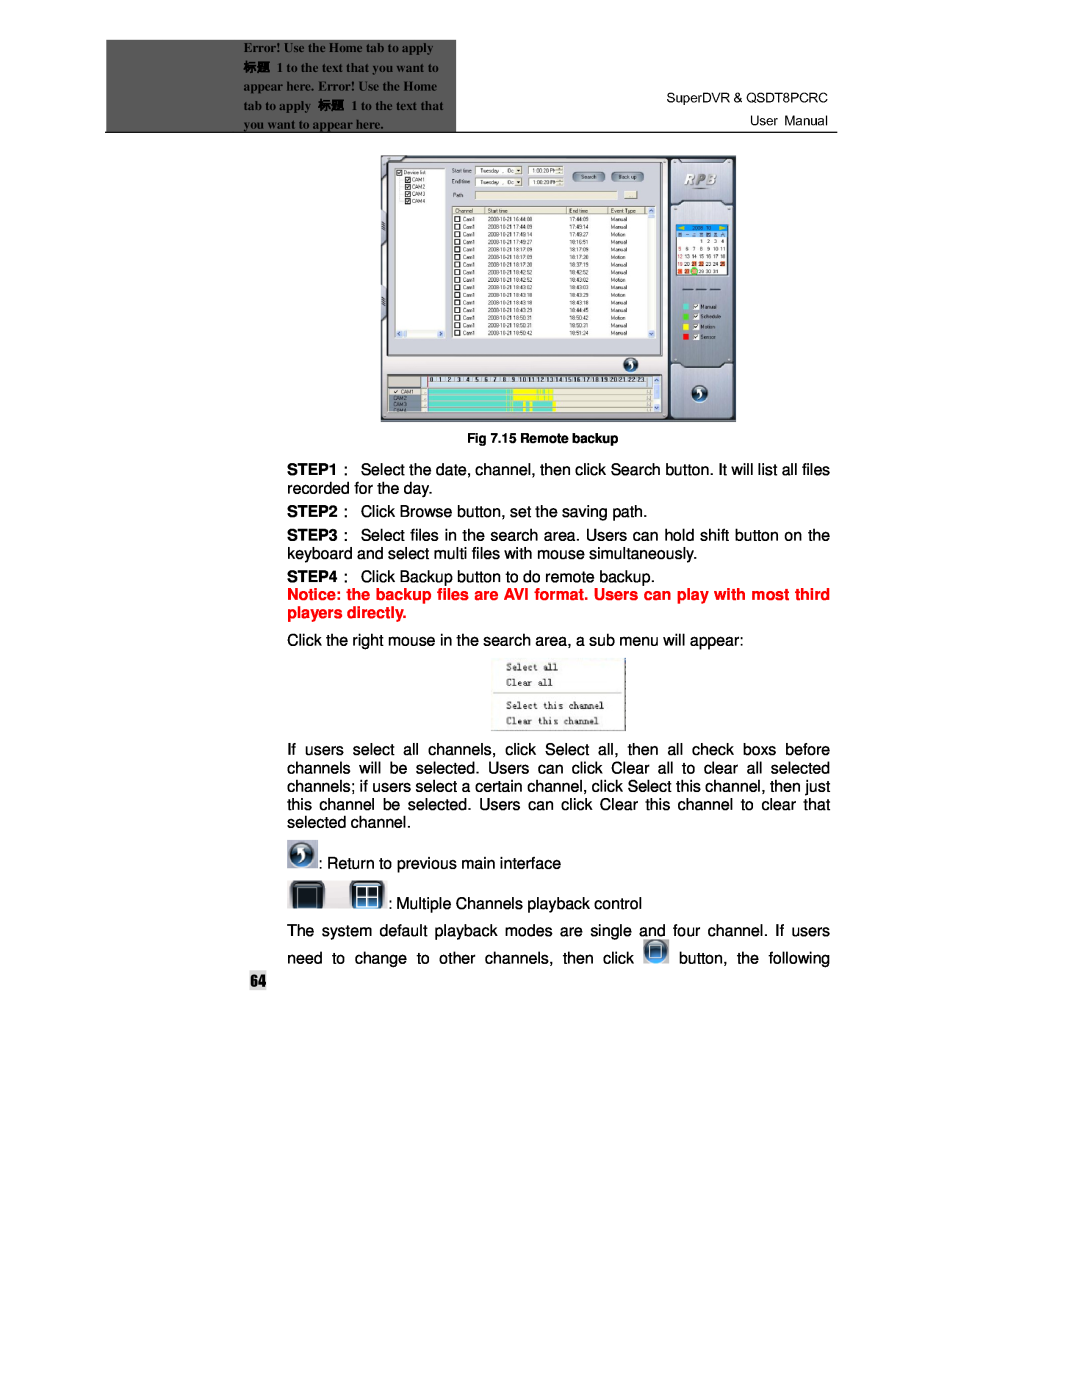 Q-See QSDT8PCRC manual Click Browse button, set the saving path 